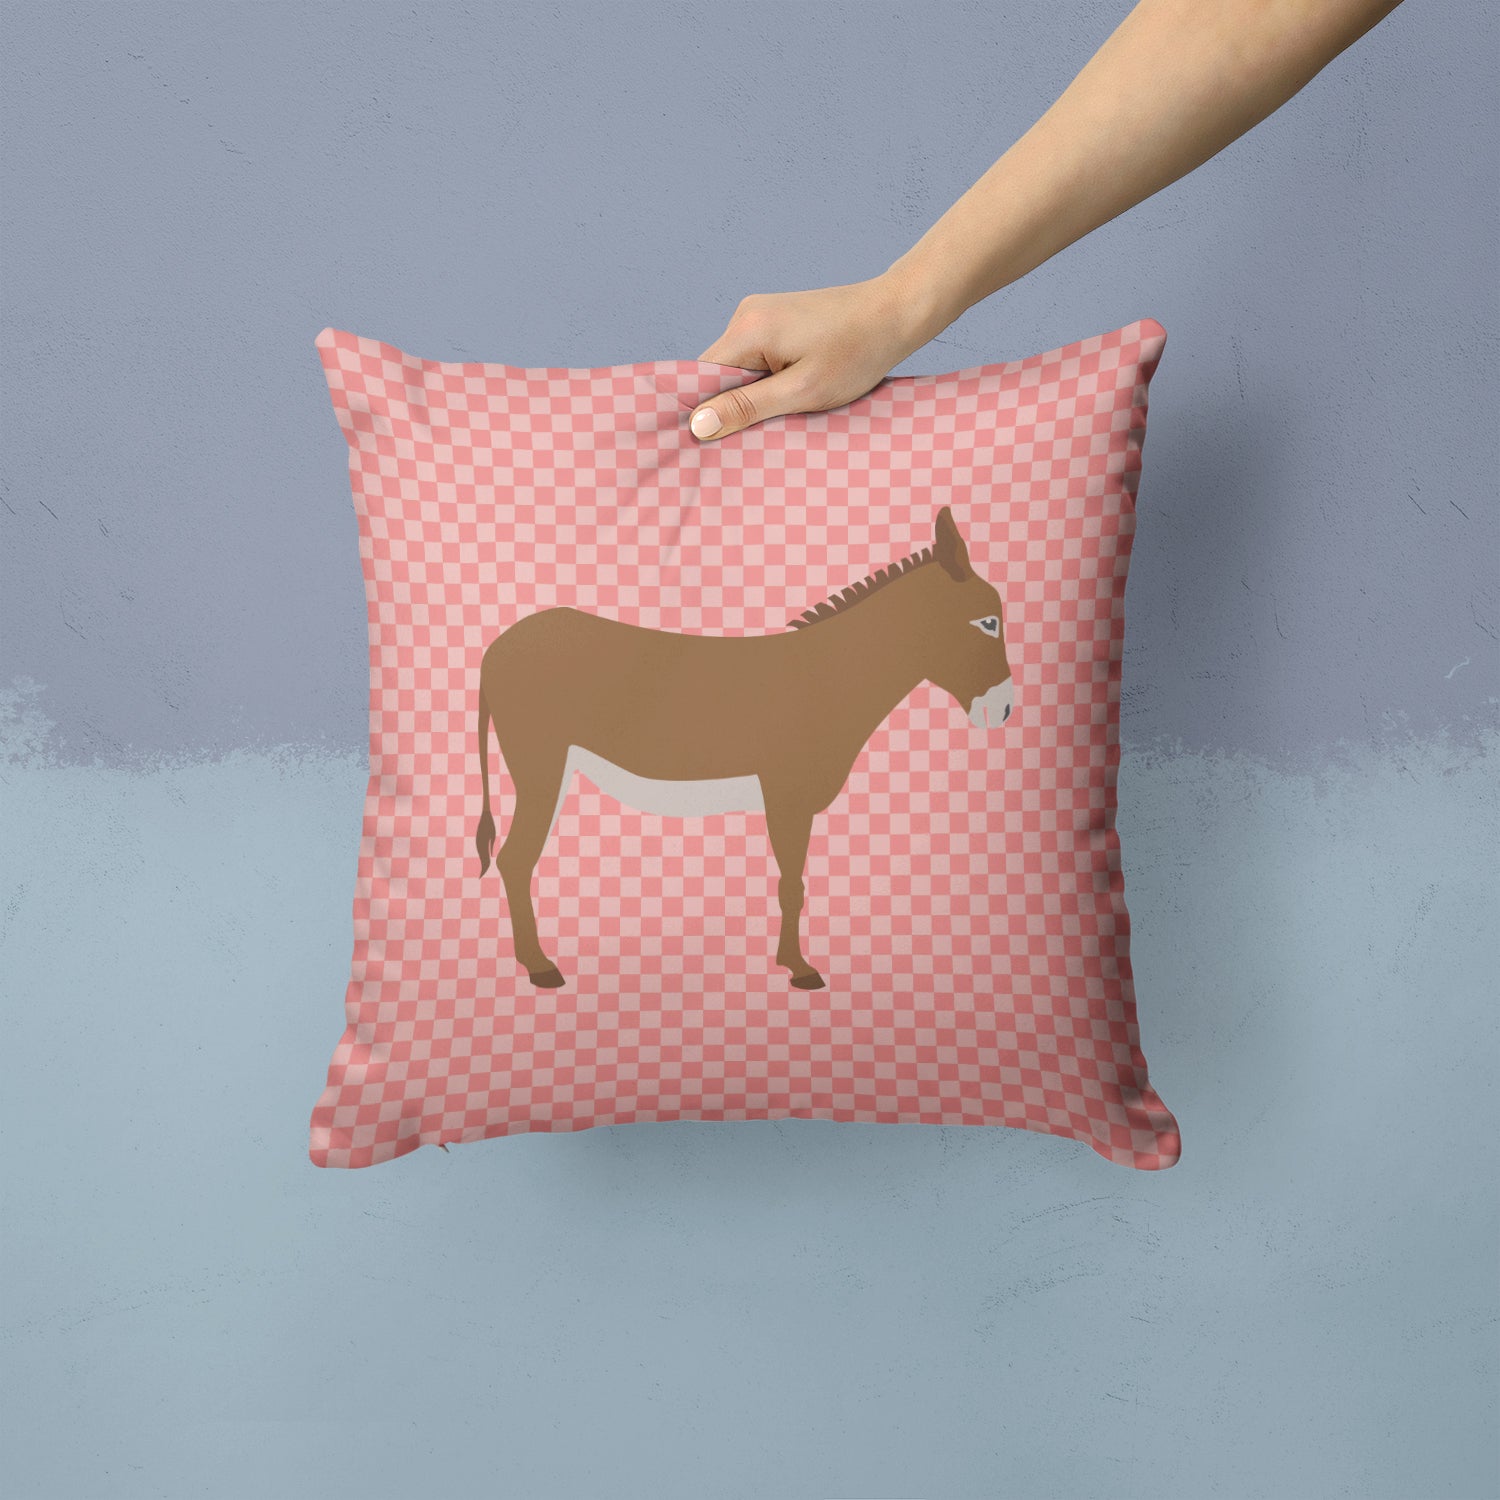 Cotentin Donkey Pink Check Fabric Decorative Pillow BB7849PW1414 - the-store.com